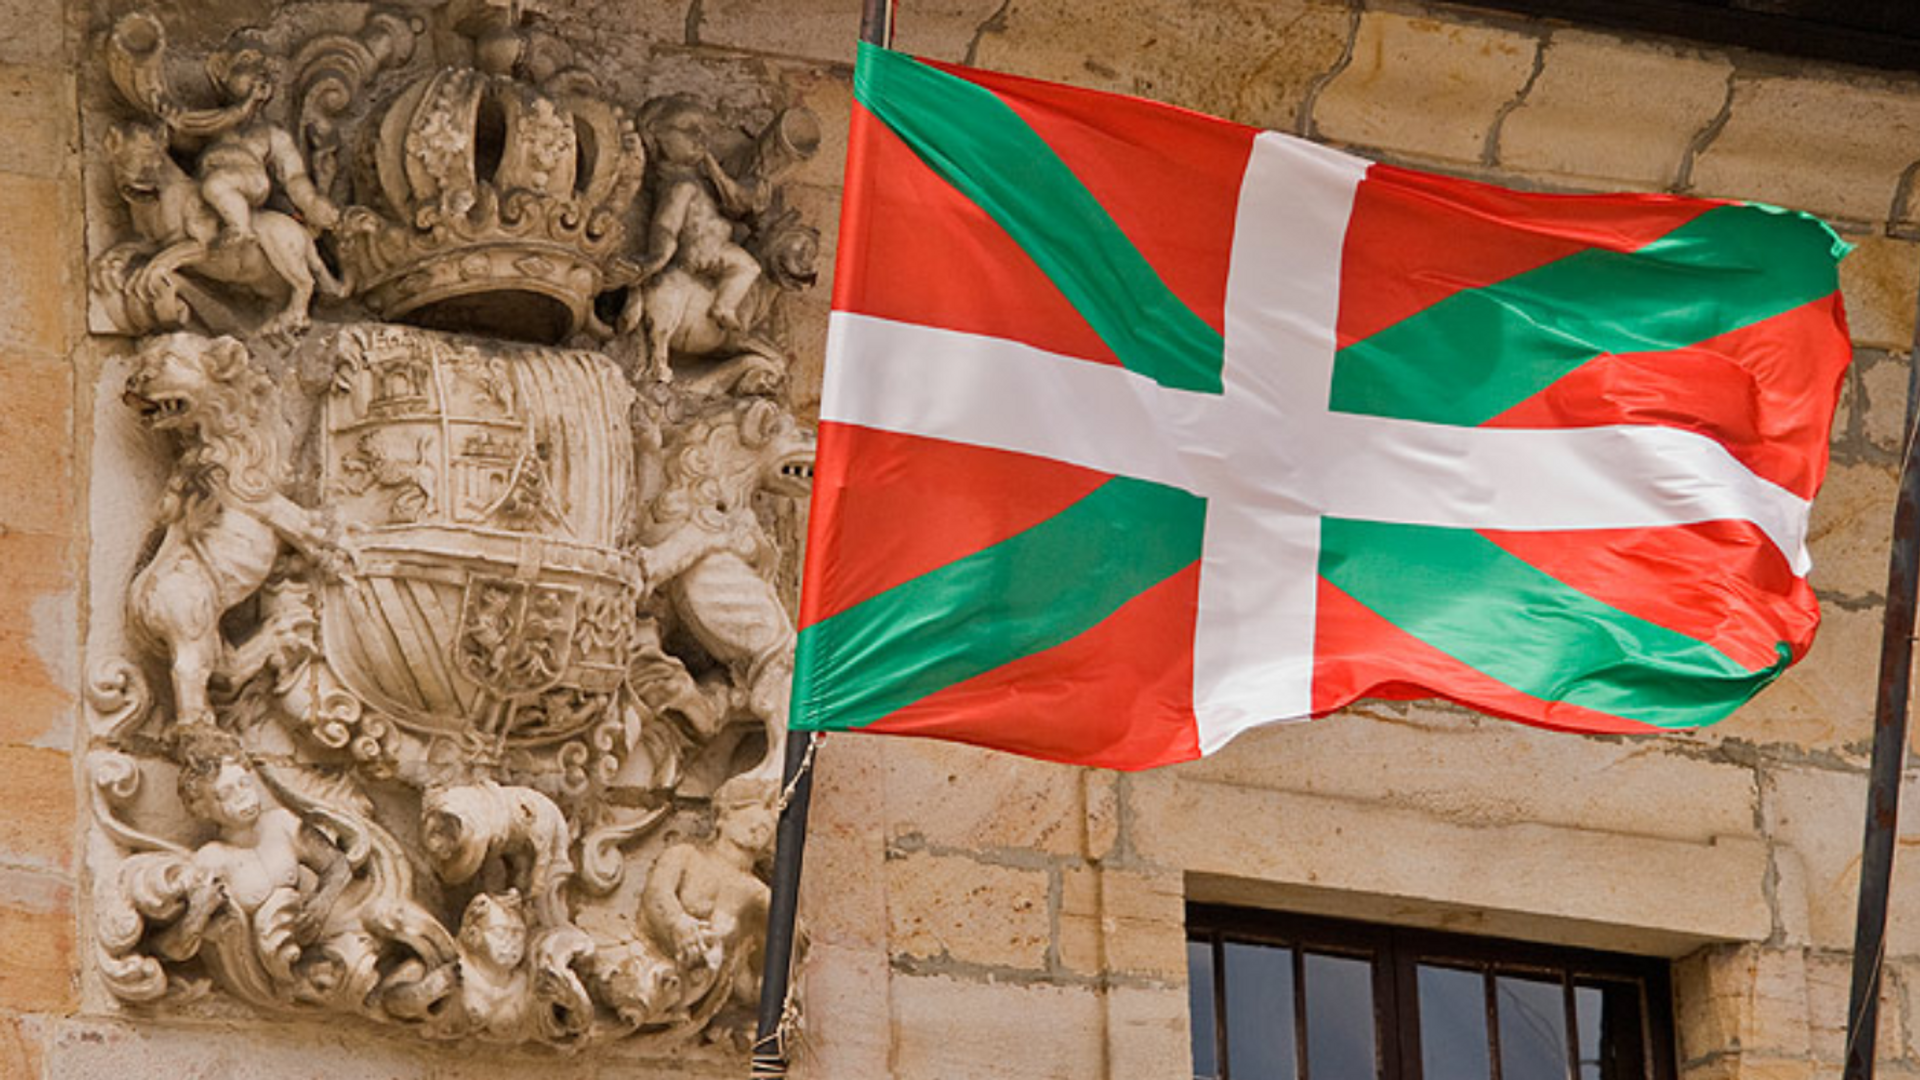 Bandera oficial del País Vasco adoptada por el Estatuto de Autonomía de 1979 - Sputnik Mundo, 1920, 09.08.2021